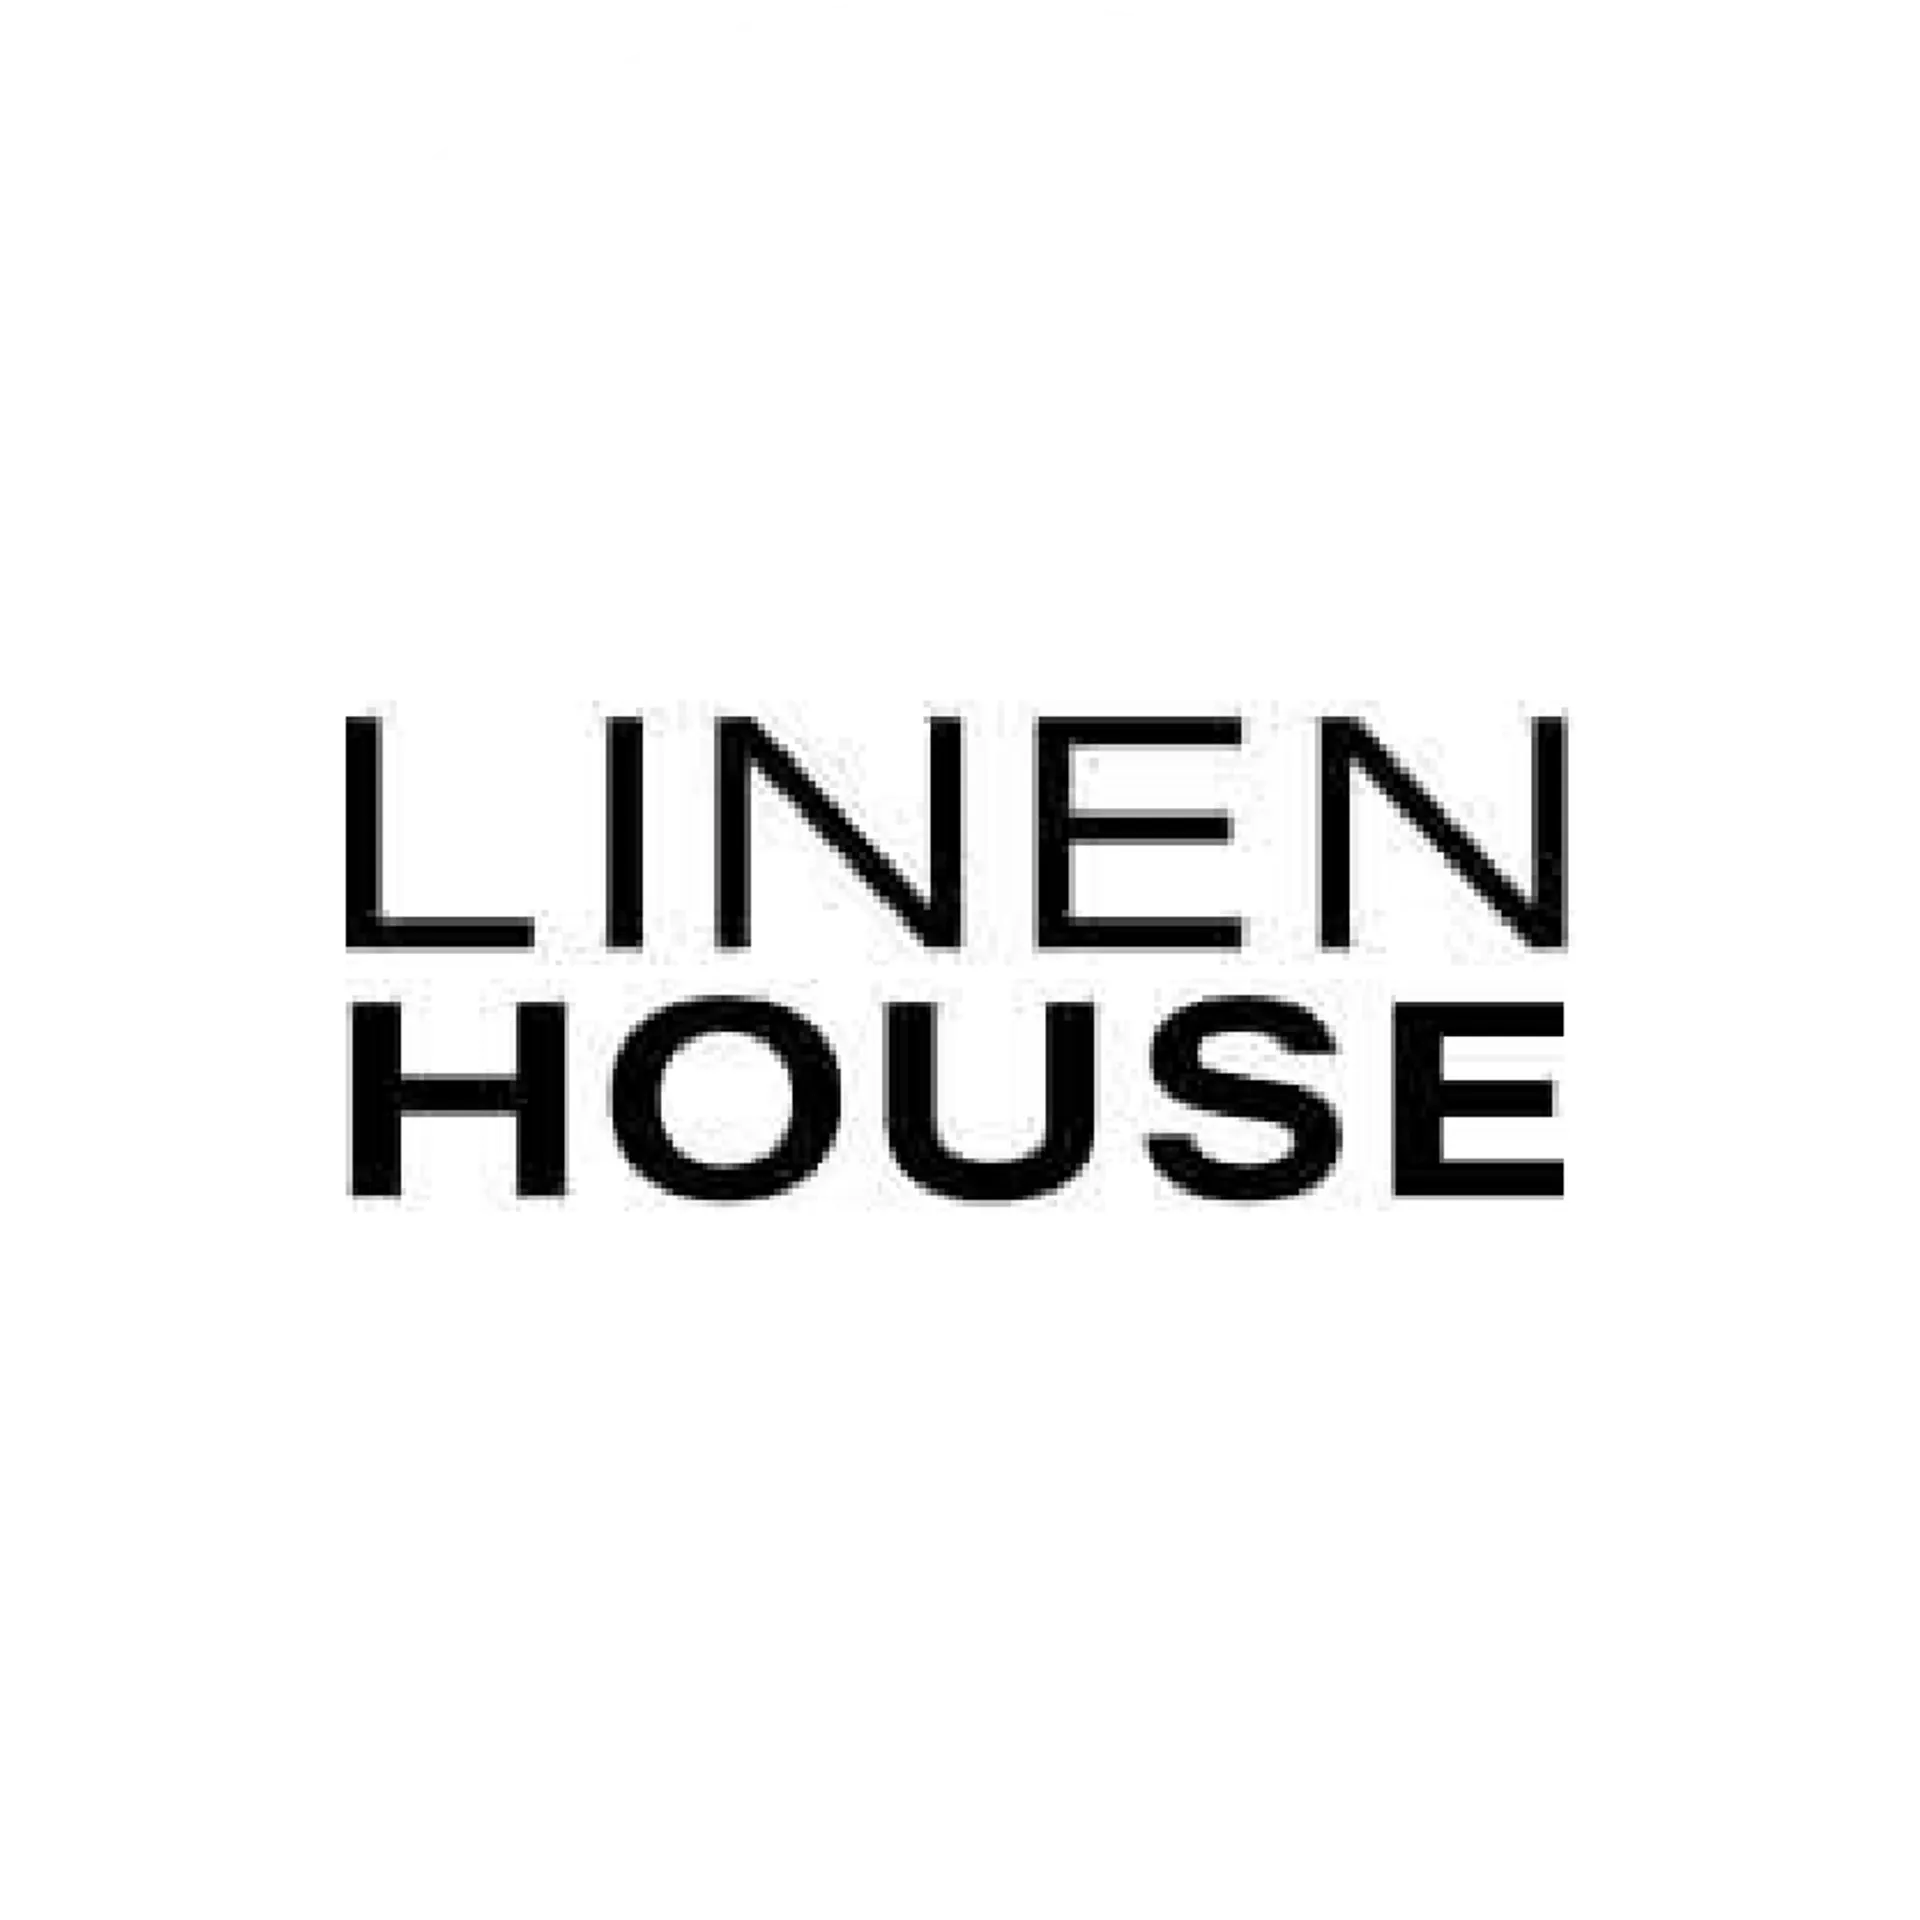 LINEN HOUSE logo of current flyer